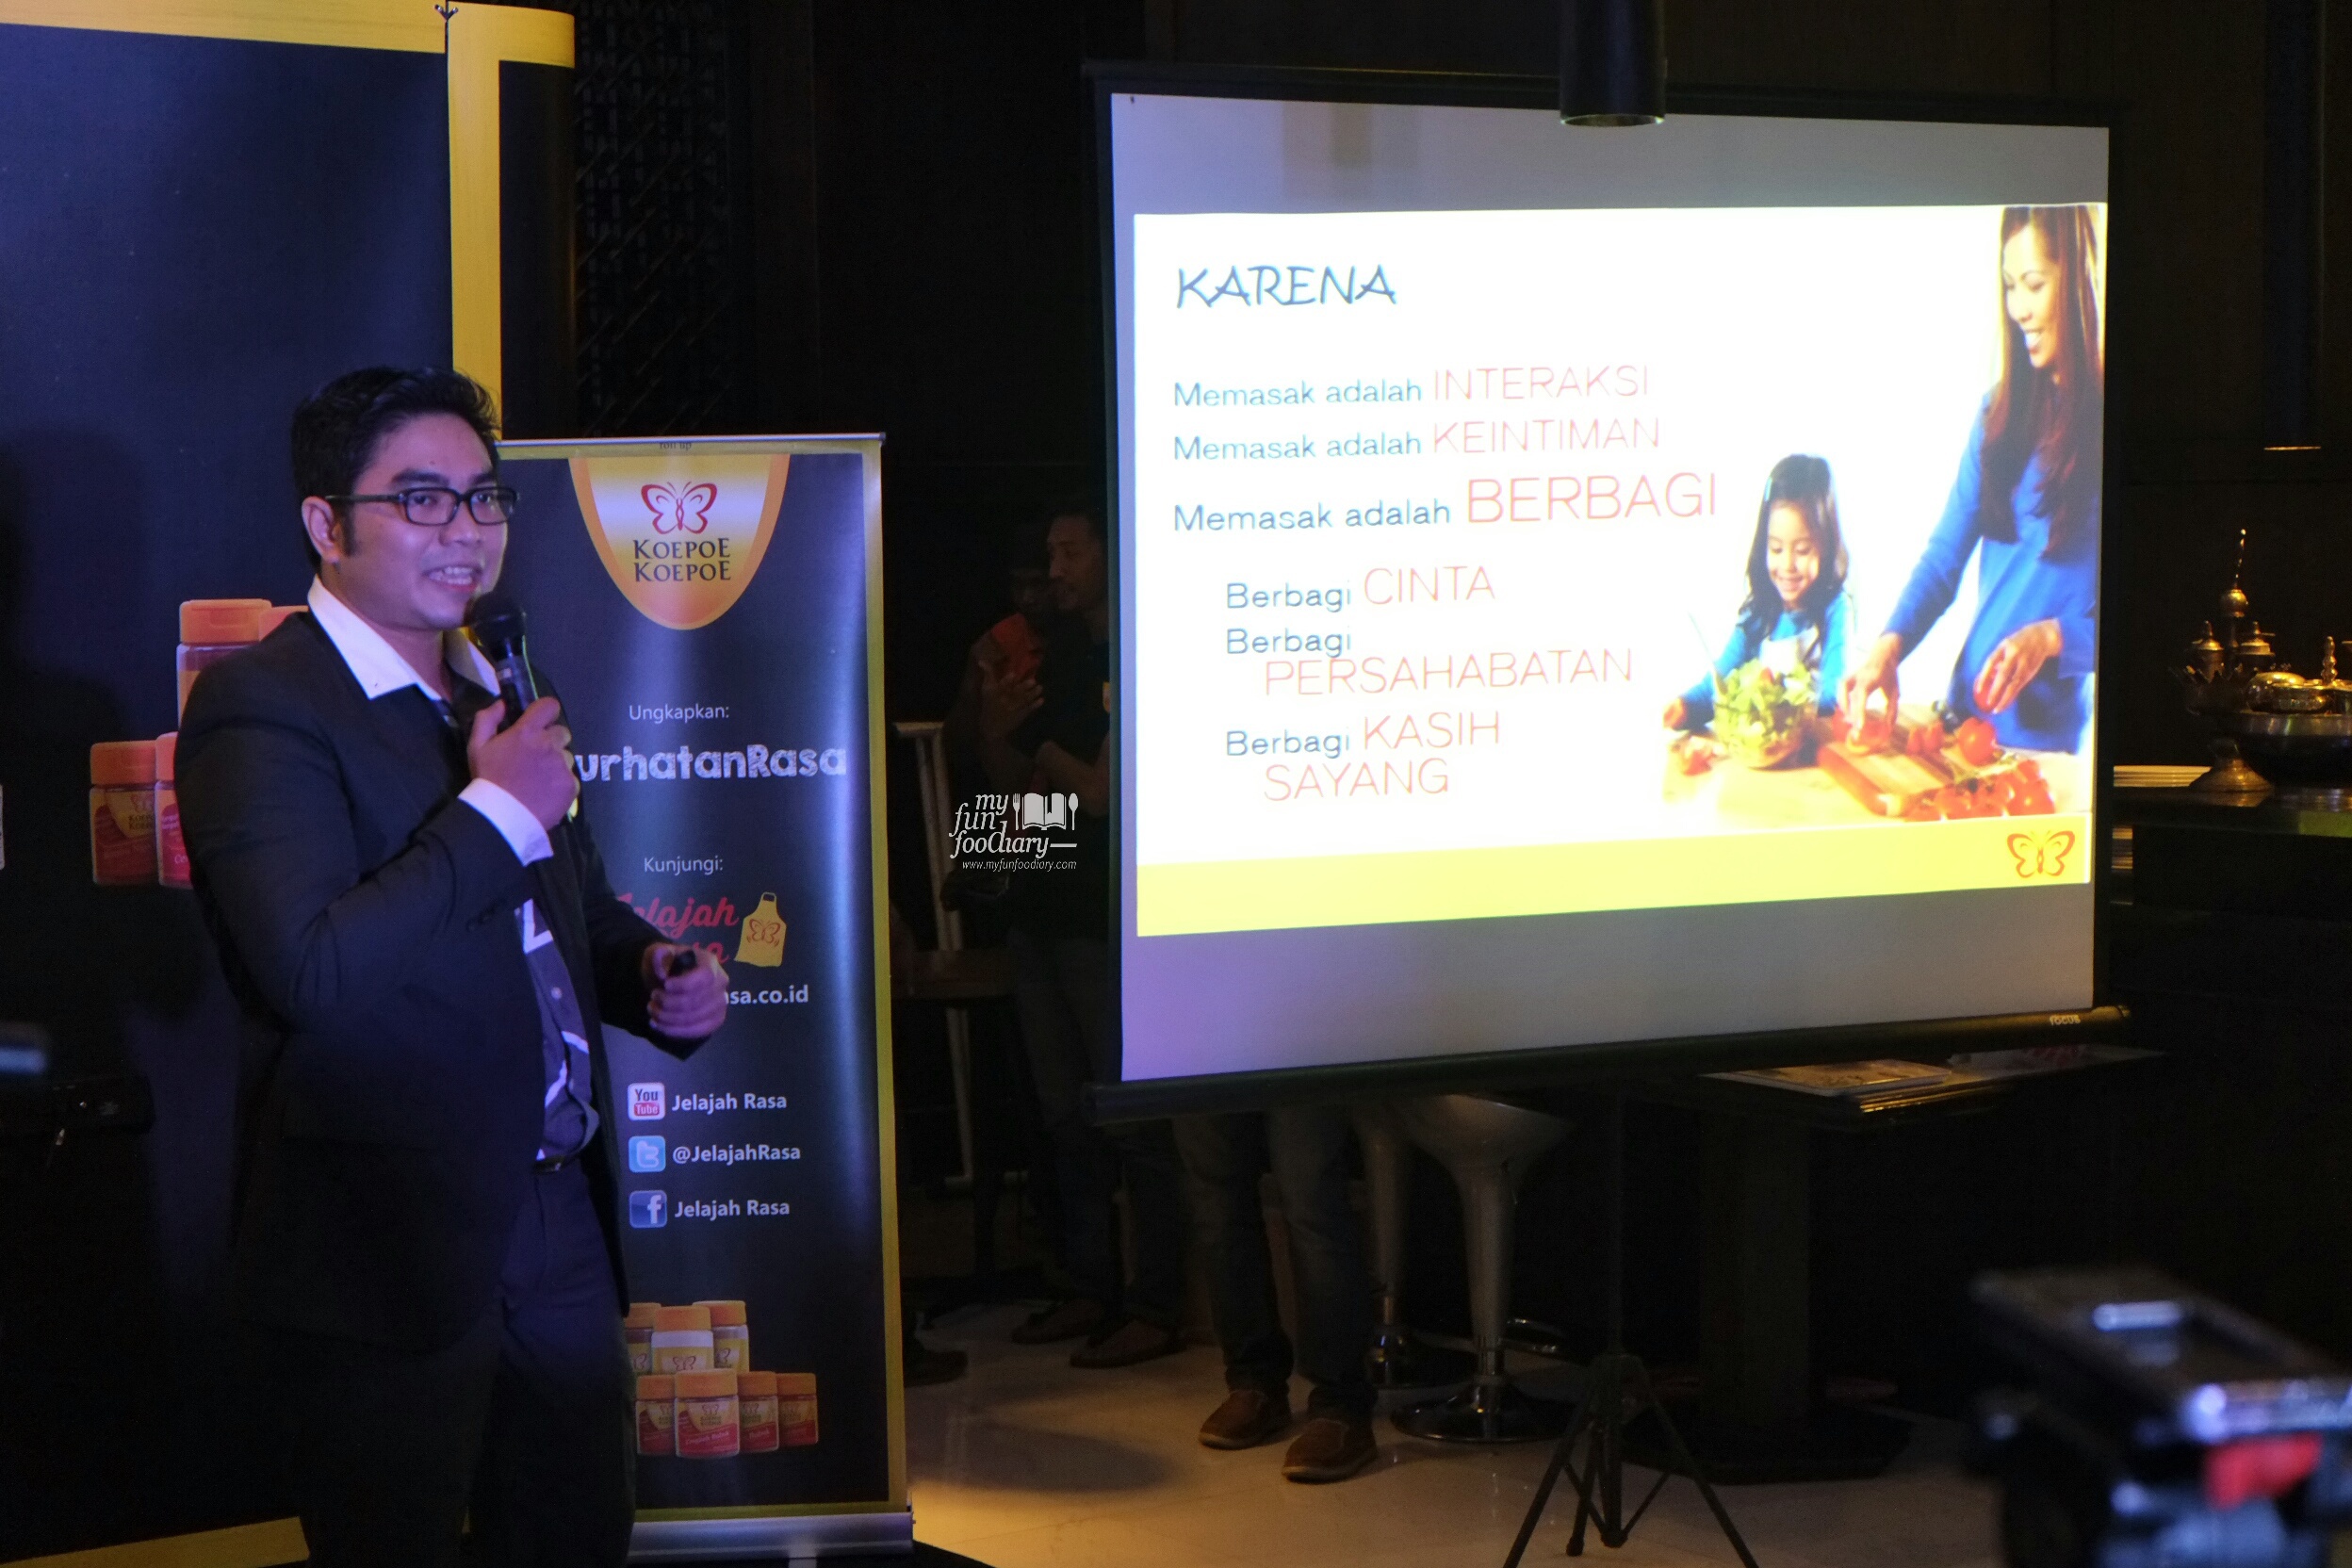 Pak Ahcmad as Head of Marketing at Koepoe Koepoe by Myfunfoodiary